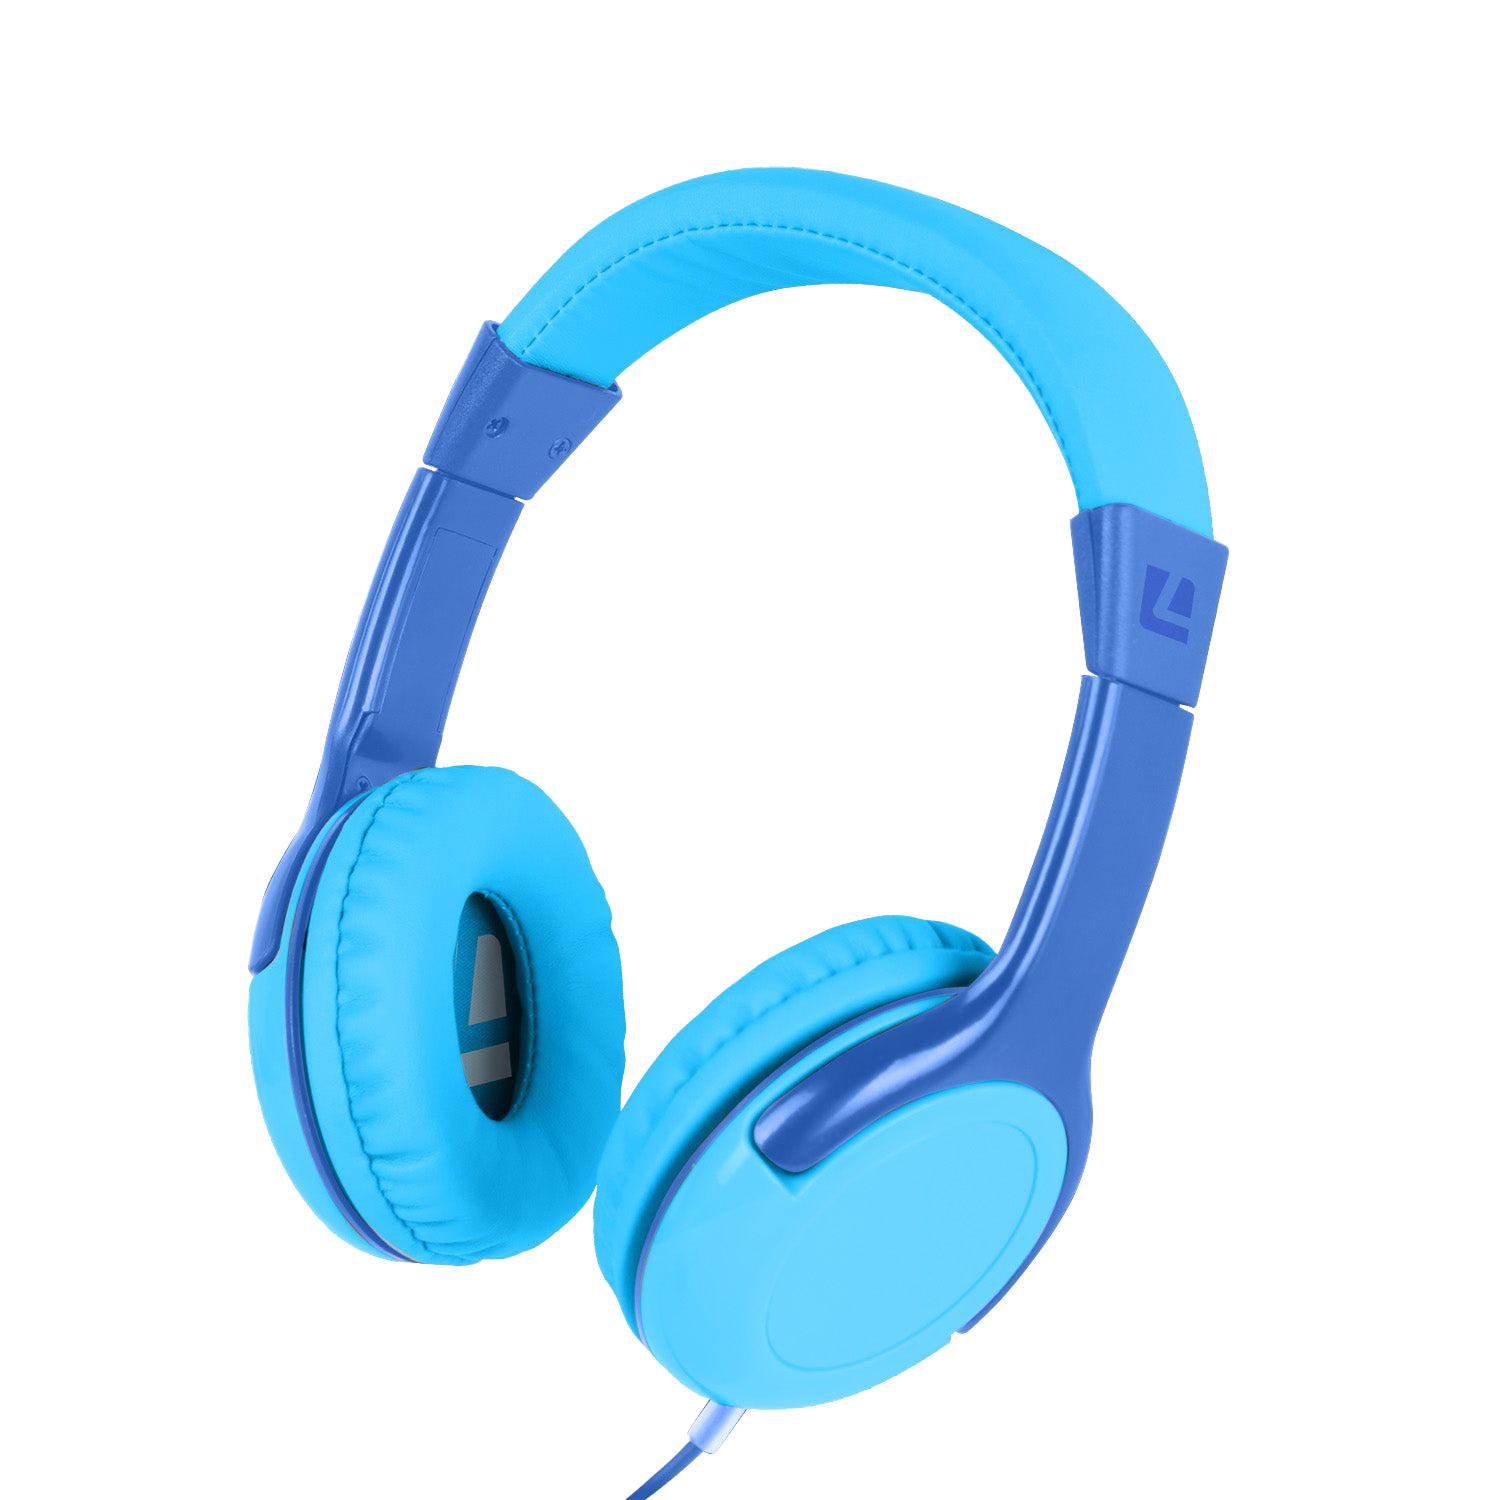 KIDZ Volume Limited Headphones